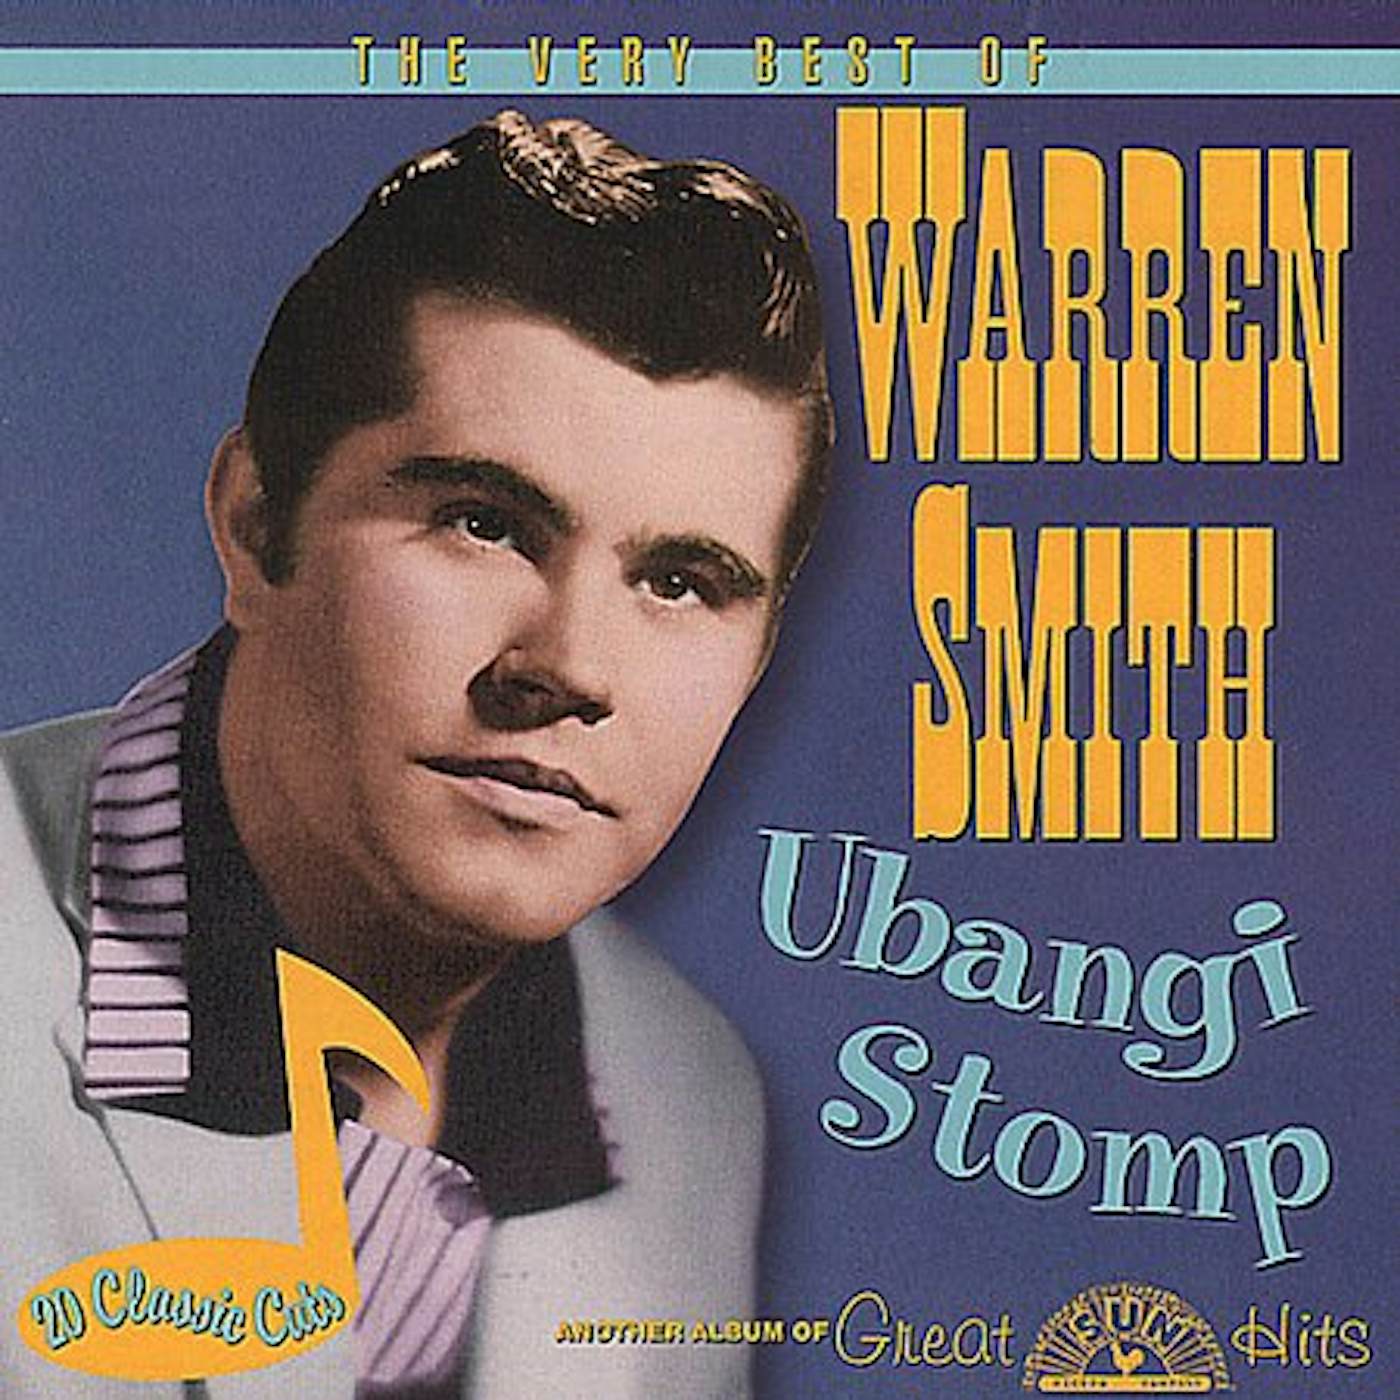 UBANGI STOMP: VERY BEST OF WARREN SMITH CD